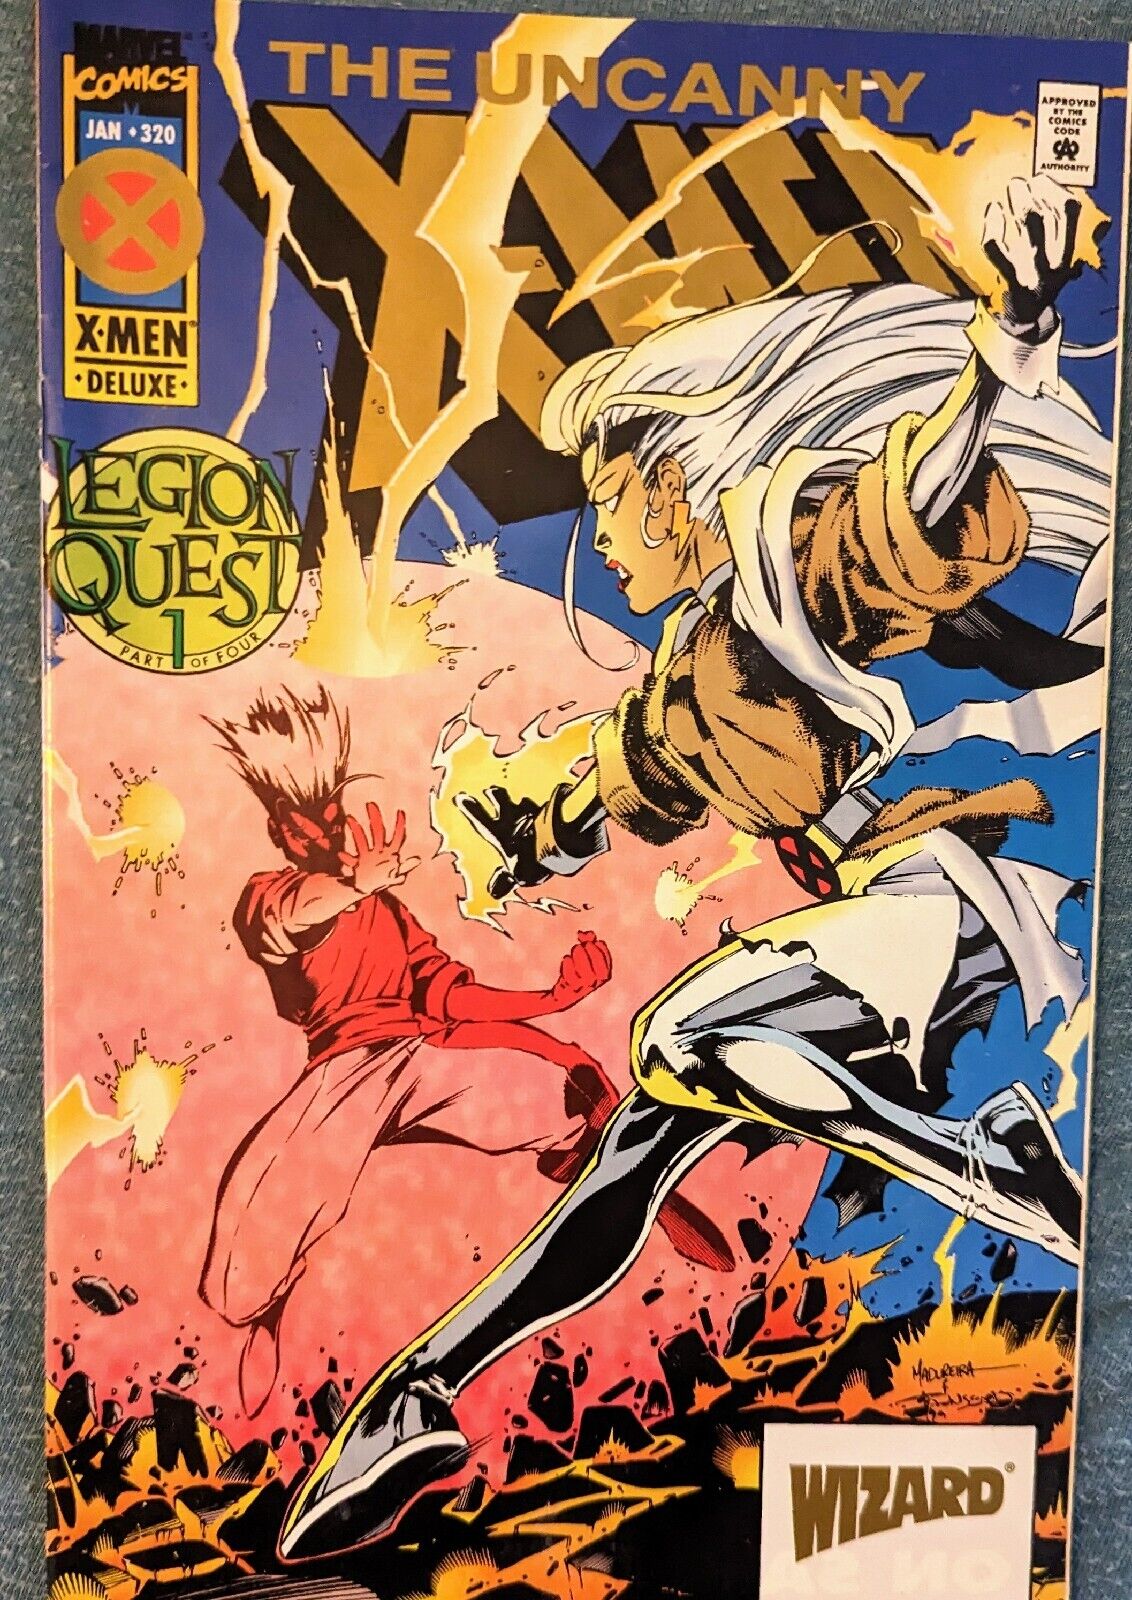 ⚡⚡VTG RARE HTF Collectable UNCANNY X-MEN #320 Deluxe Edition Legion Quest Pt 1/4